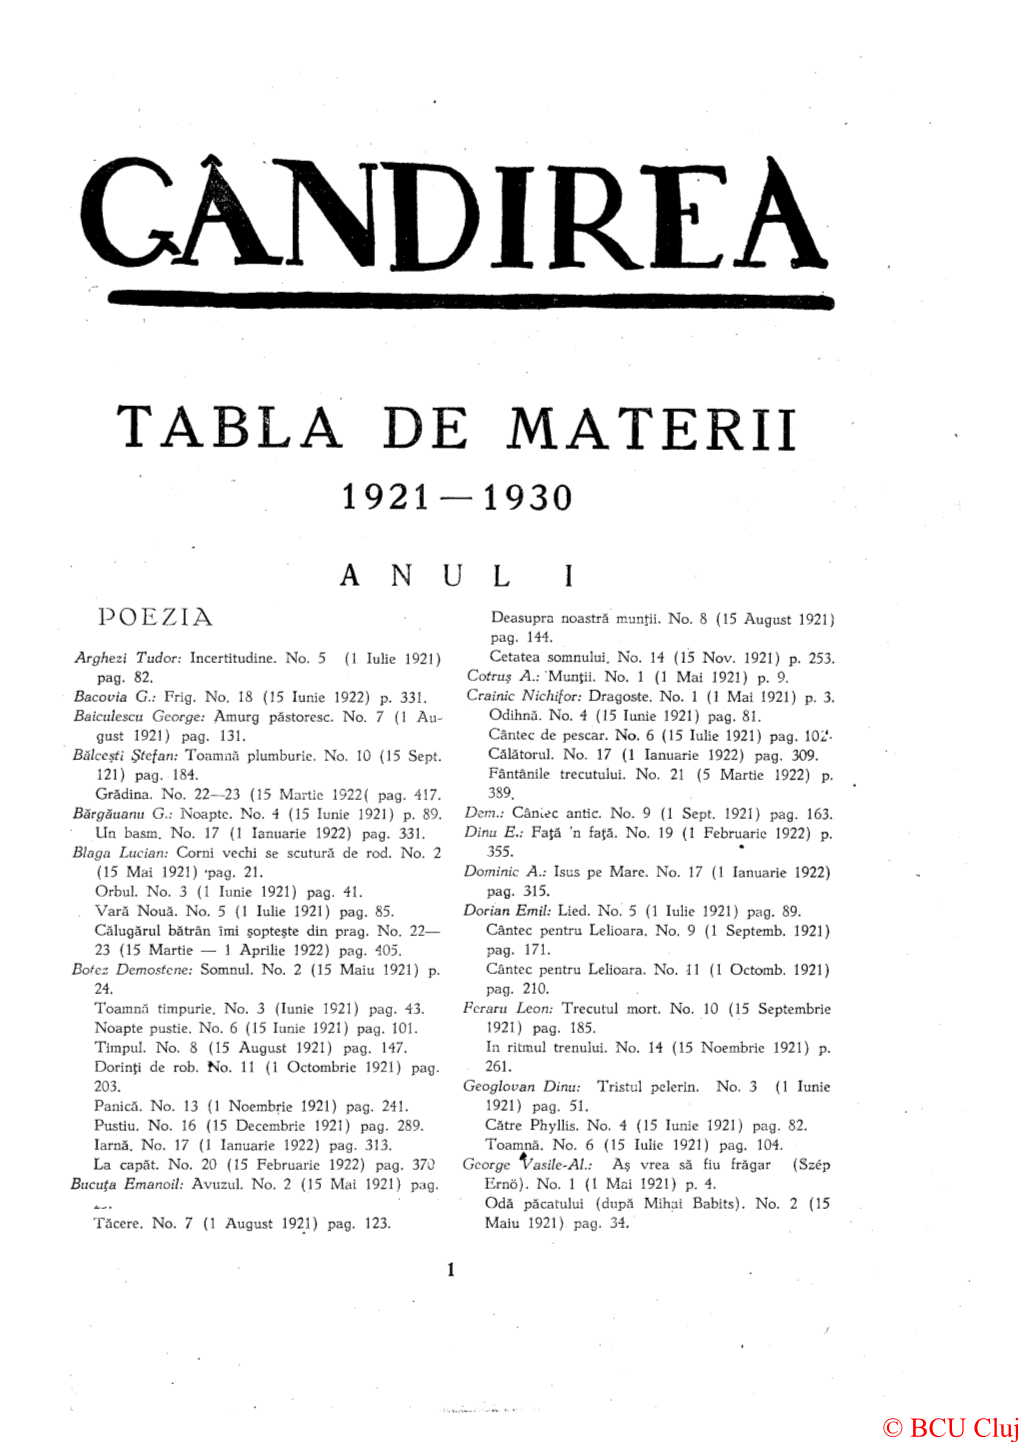 Materii 1921 1930